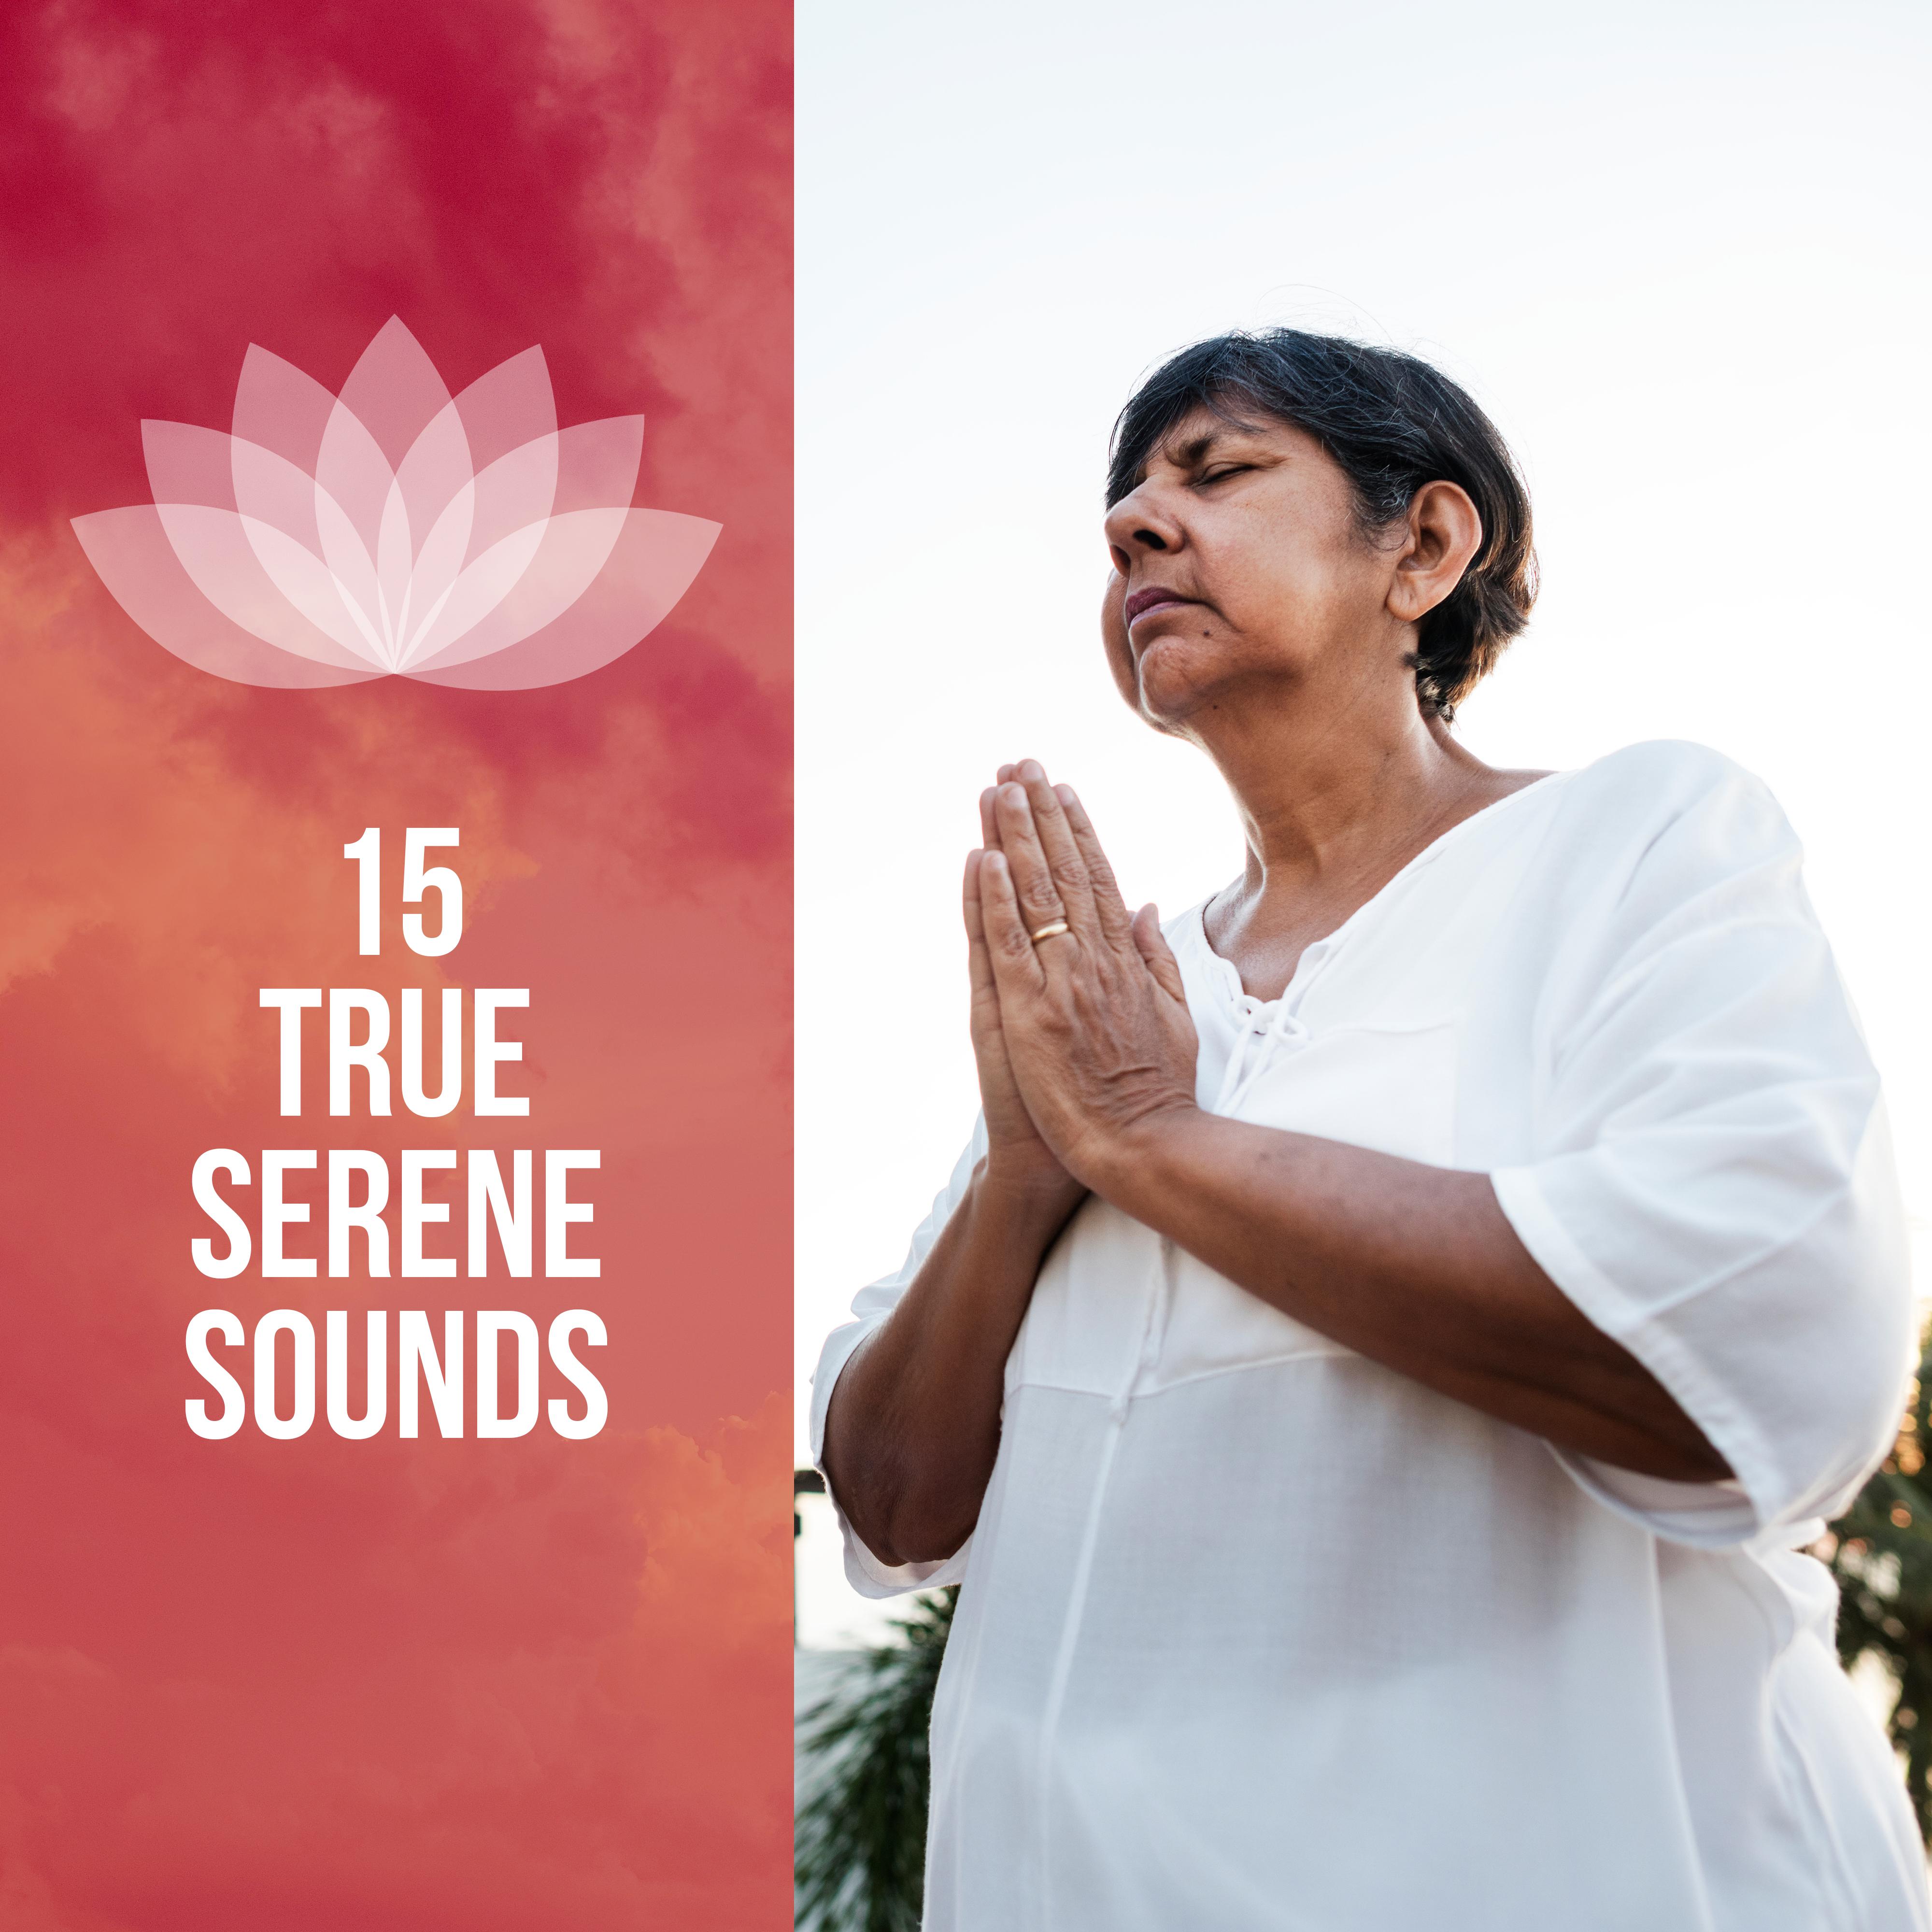 15 True Serene Sounds  Relaxing Sounds for Yoga, Deep Meditation, Deep Harmony, Spiritual Music for Relaxation, Chakra Balancing, Nature Sounds, Deeper Focus